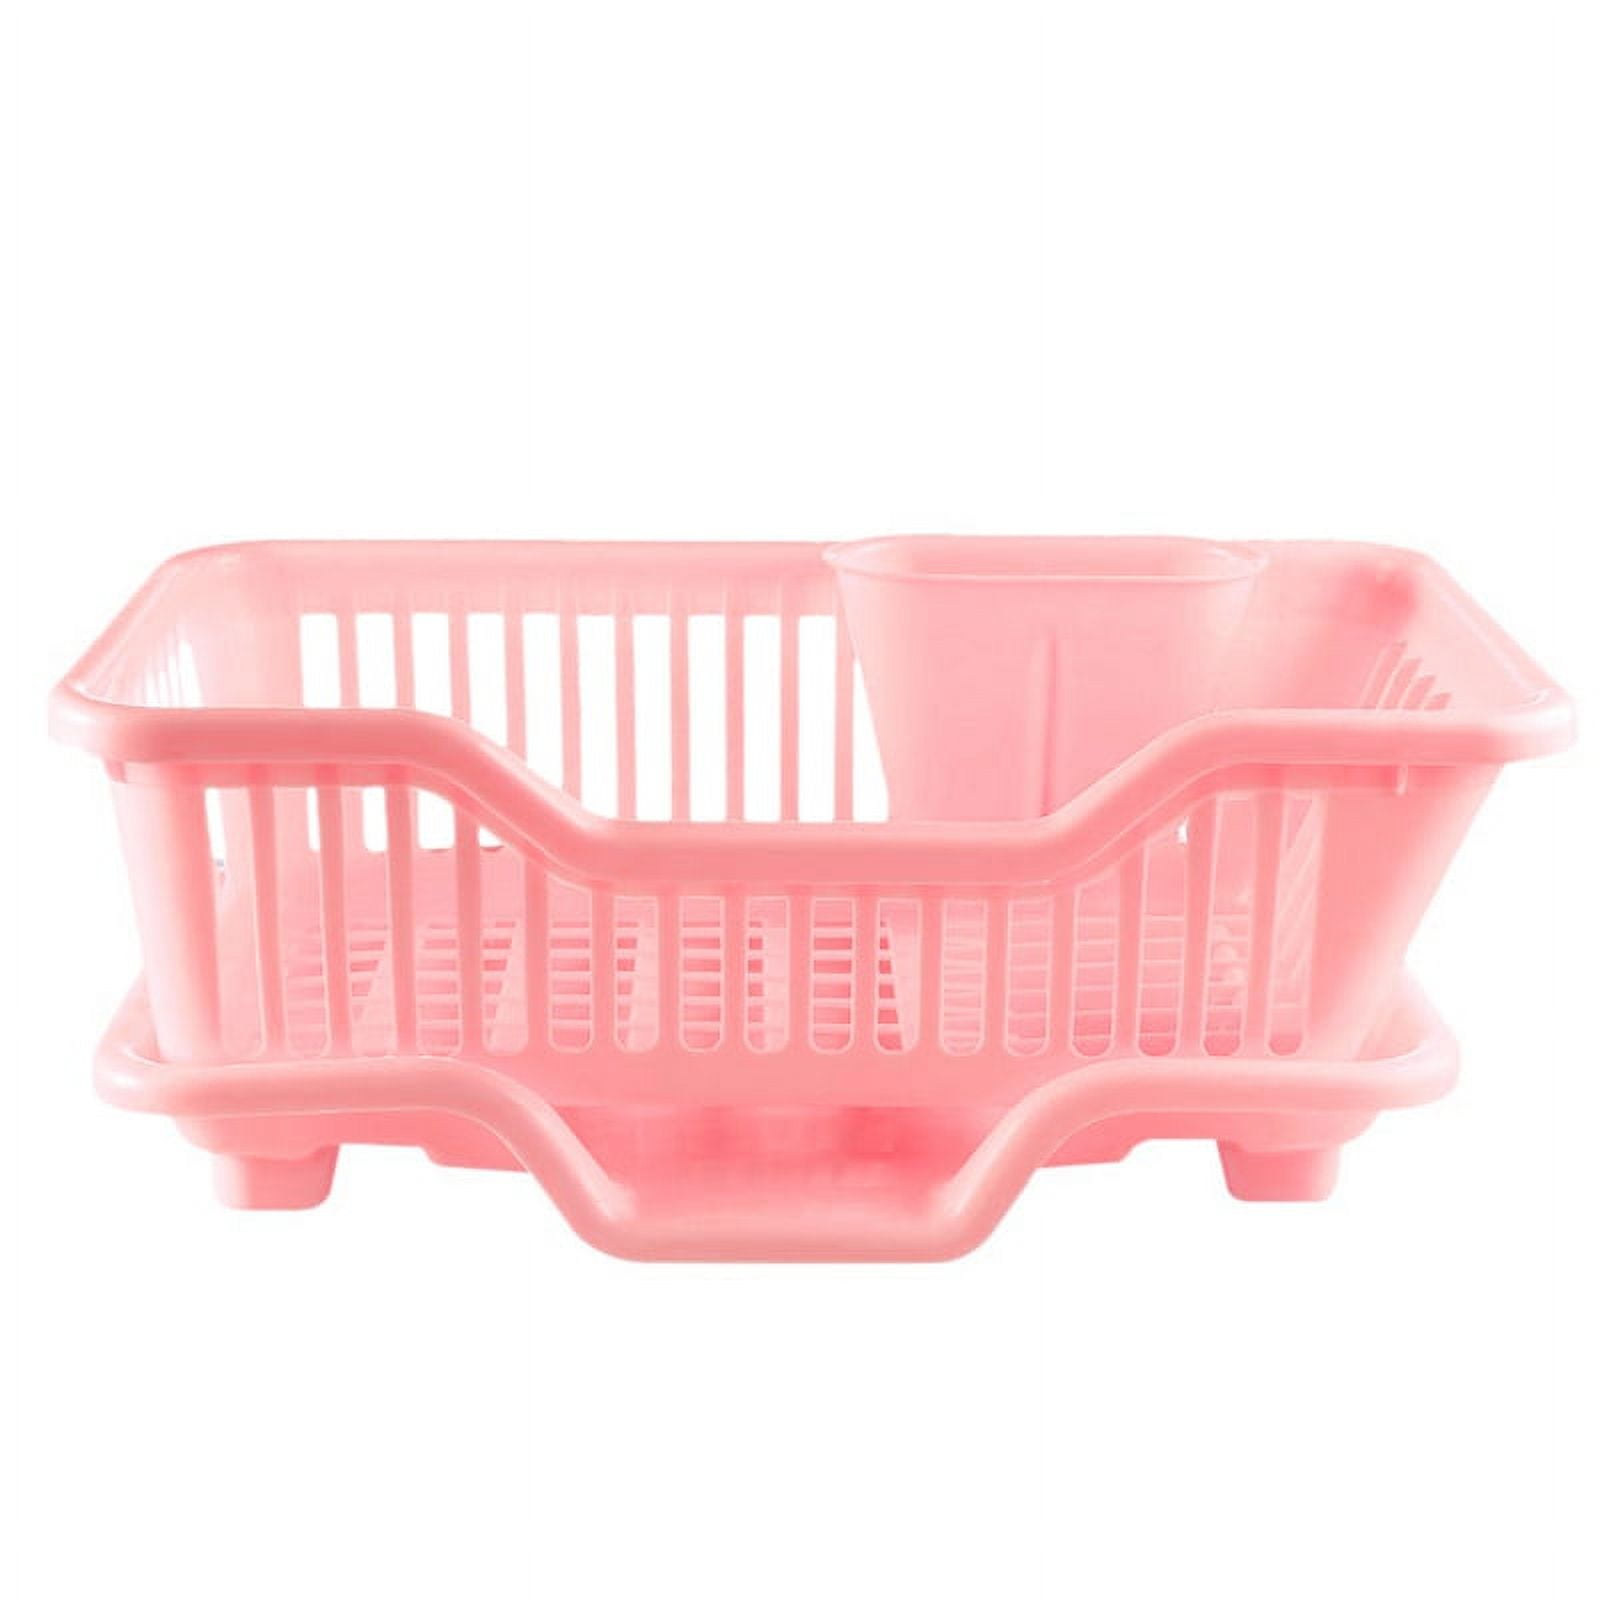 Sarvatr Pink Color Polypropylene 3in1 Dish Drainer Rack Kitchen Utensils  Organizer Drying Basket,utensil basket for kitchen with Drain Tray -  Sarvatr Store